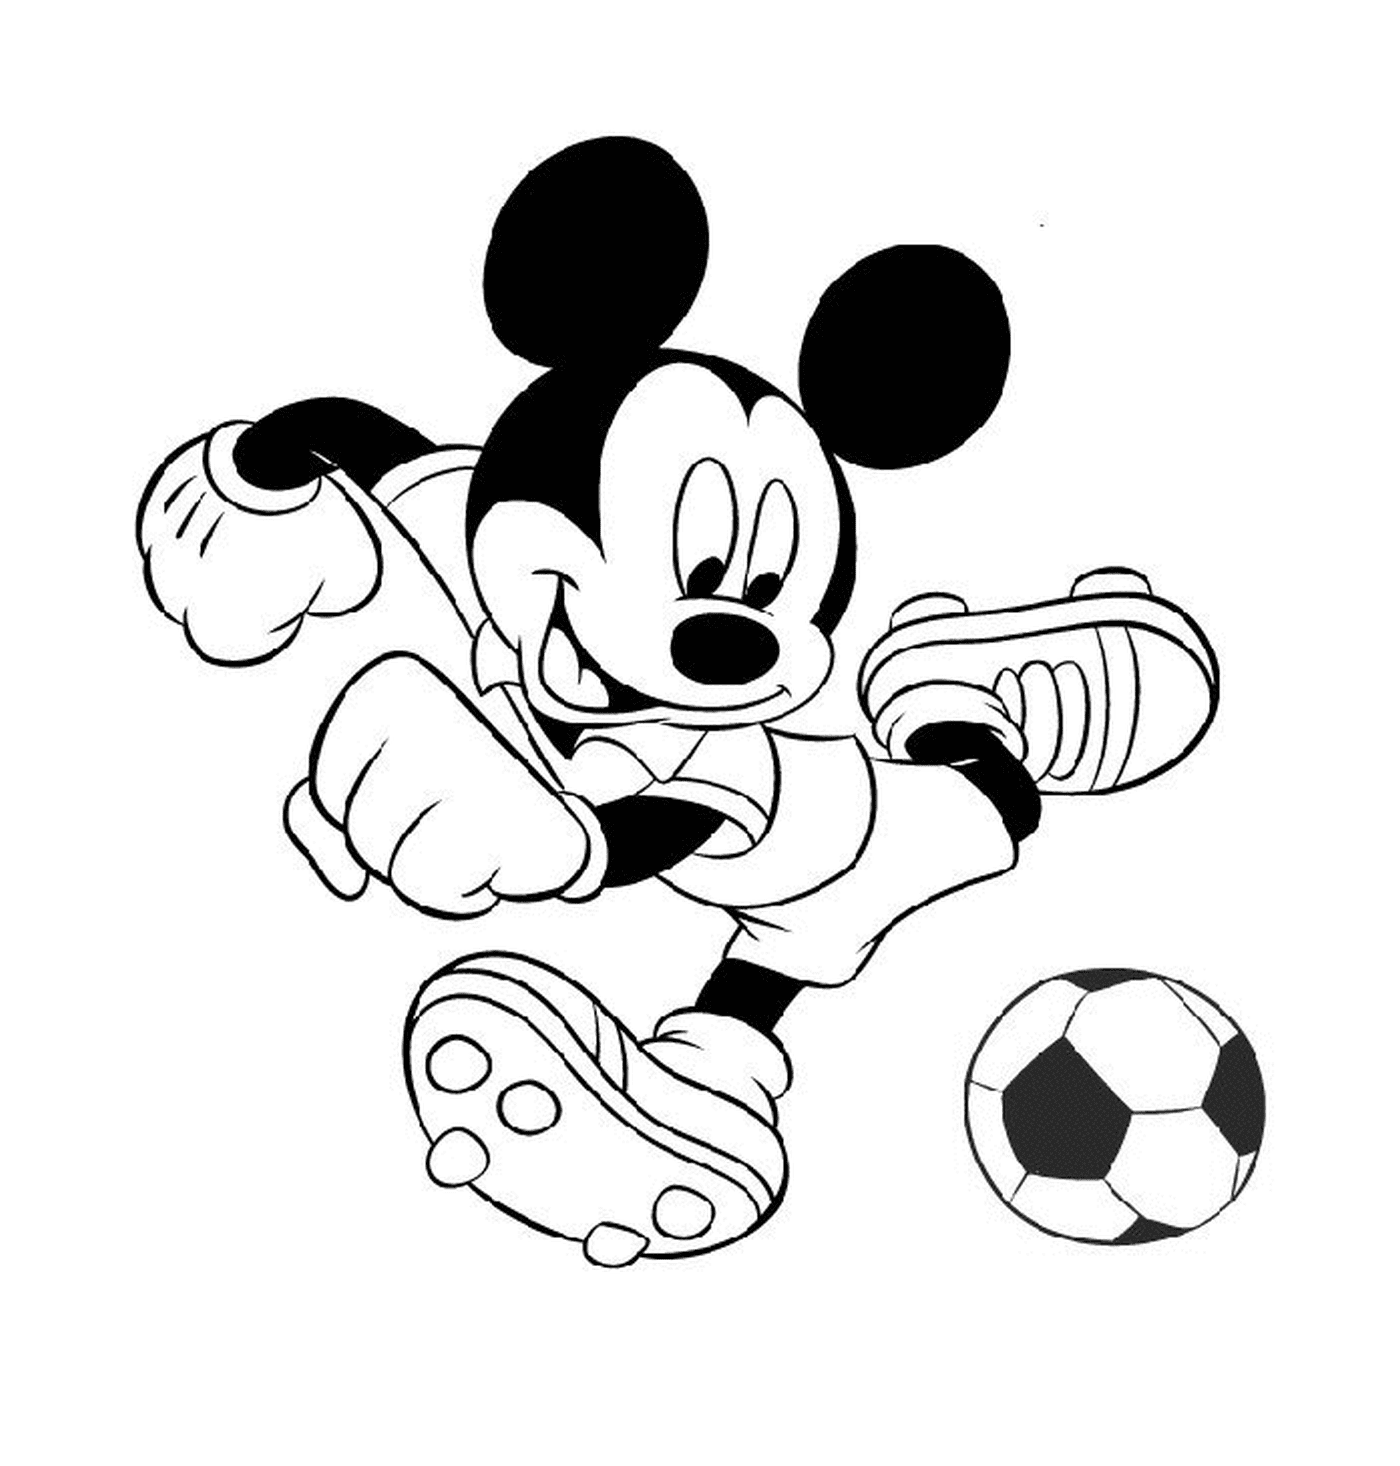  Mickey juega al fútbol: patear una pelota de fútbol 